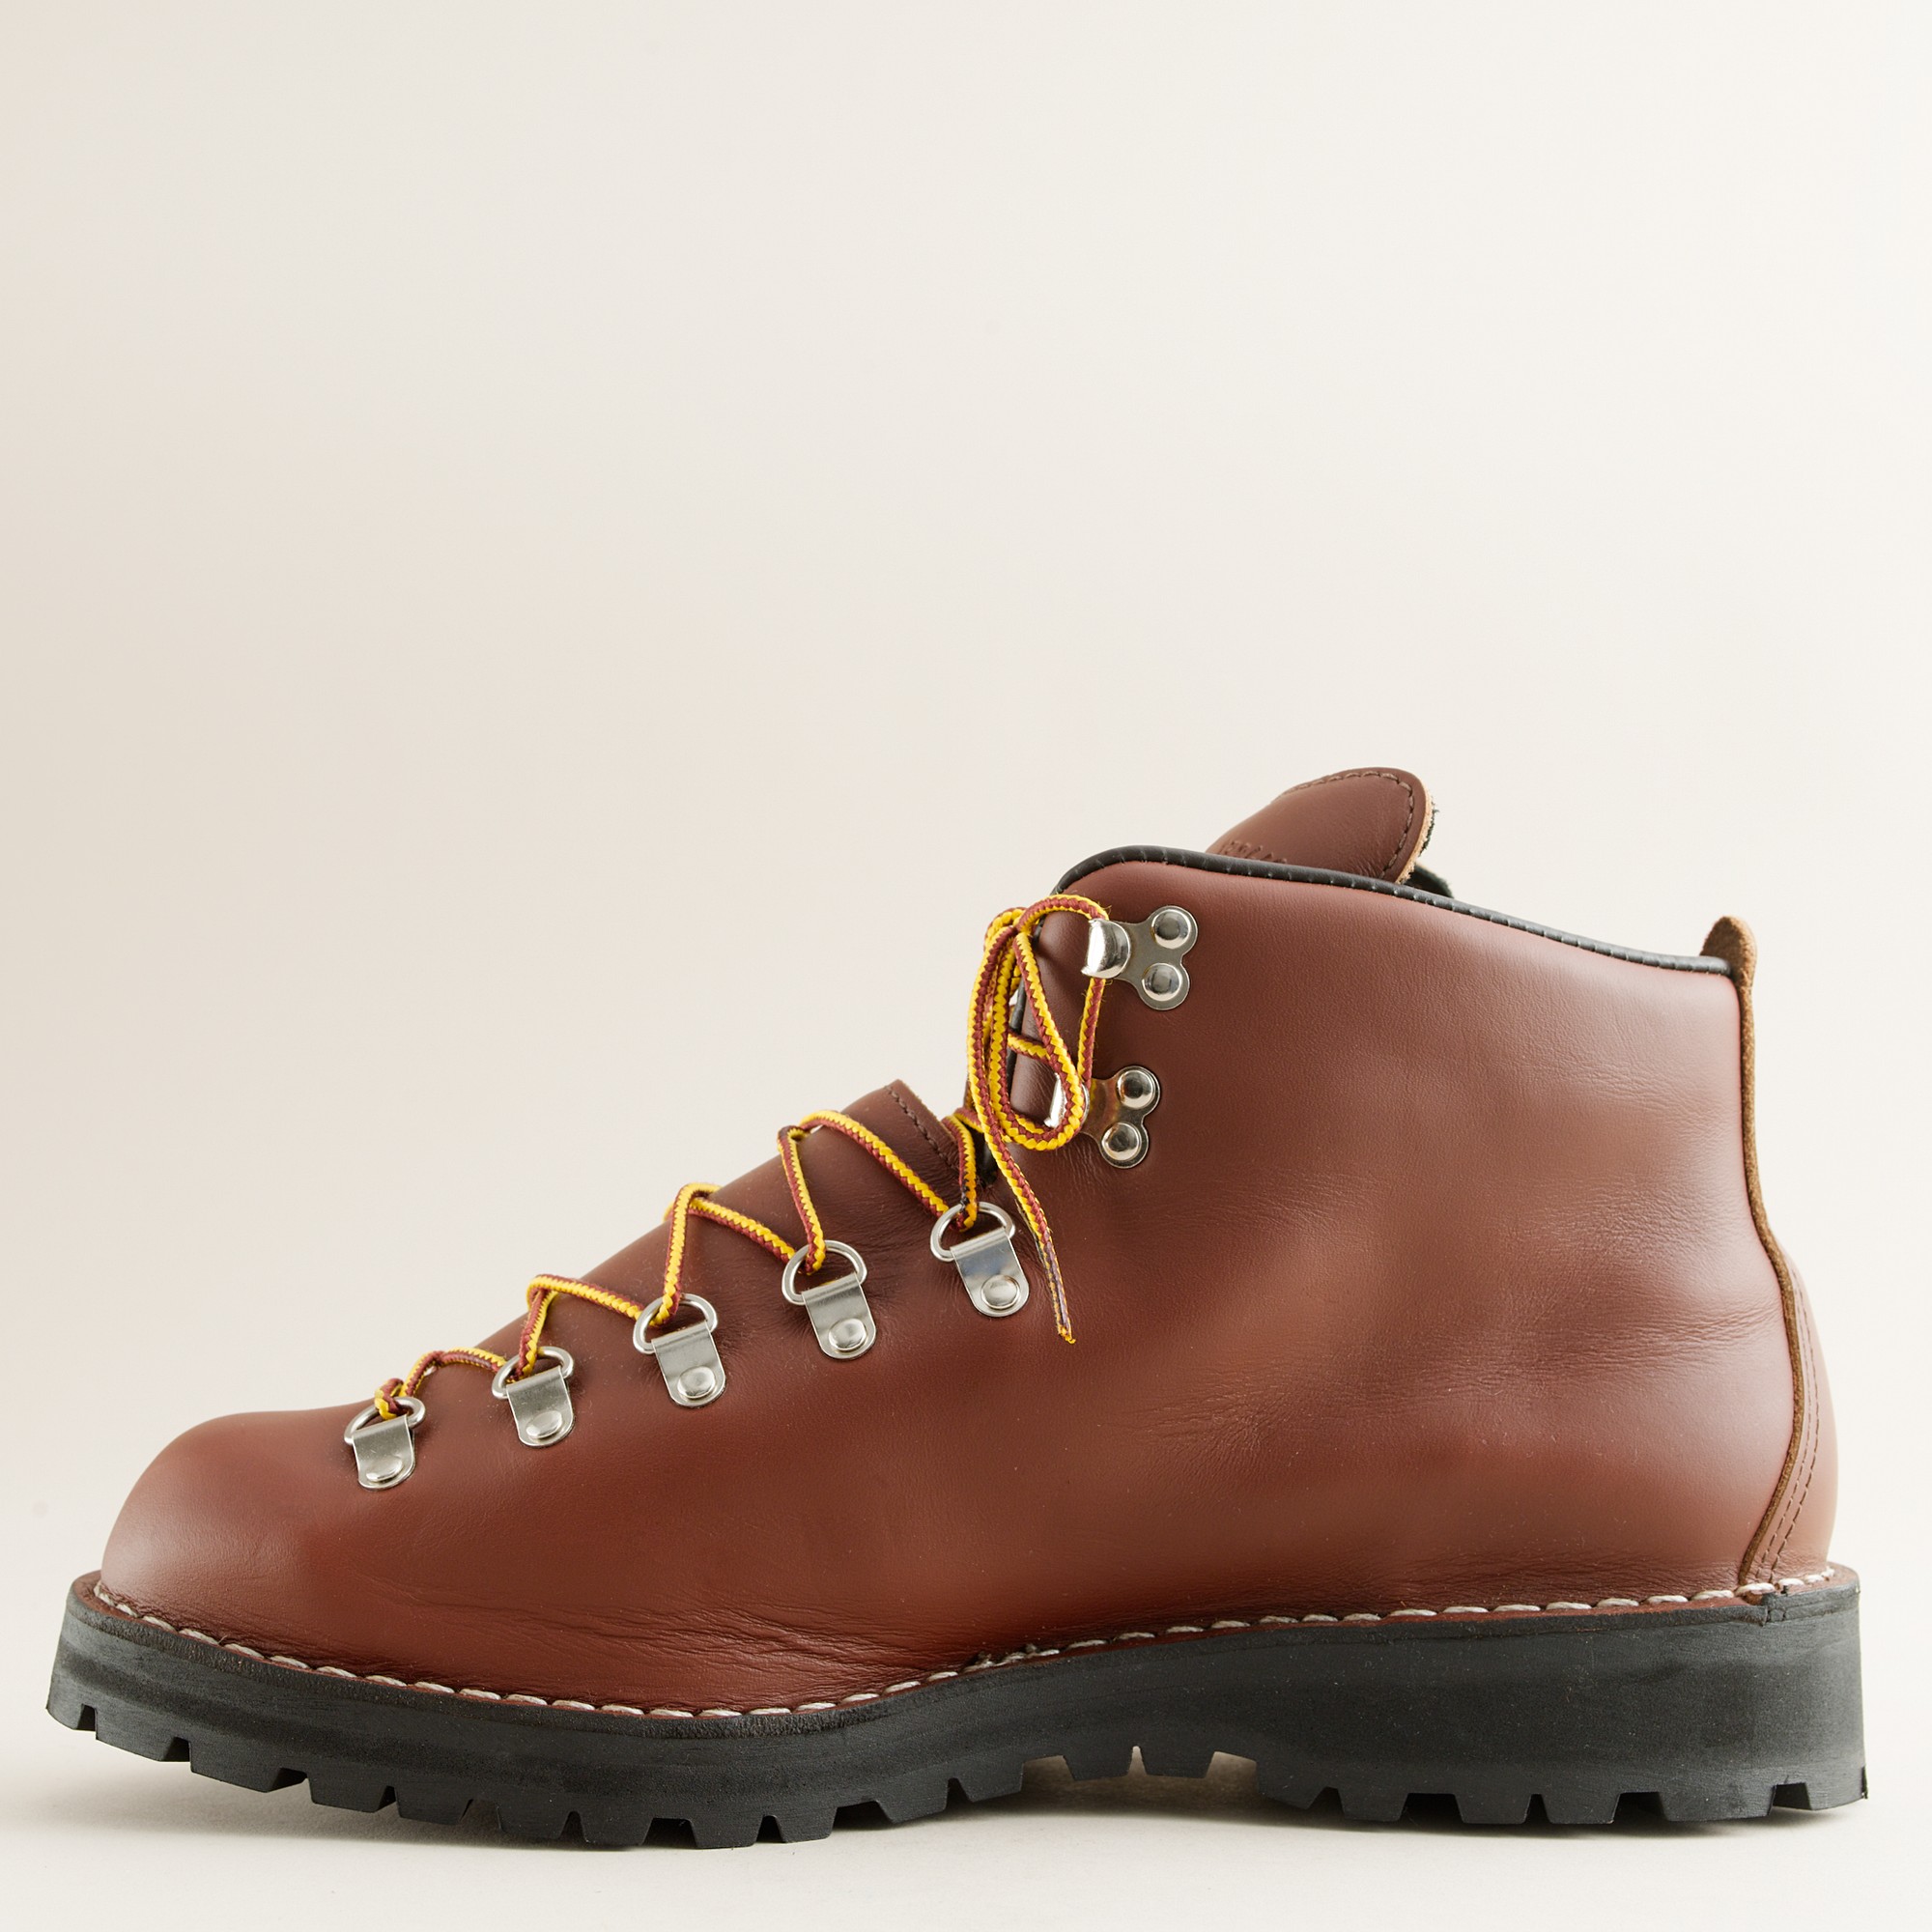 J.Crew Danner® Mountain Light Ii Hiking Boots in Brown for Men - Lyst